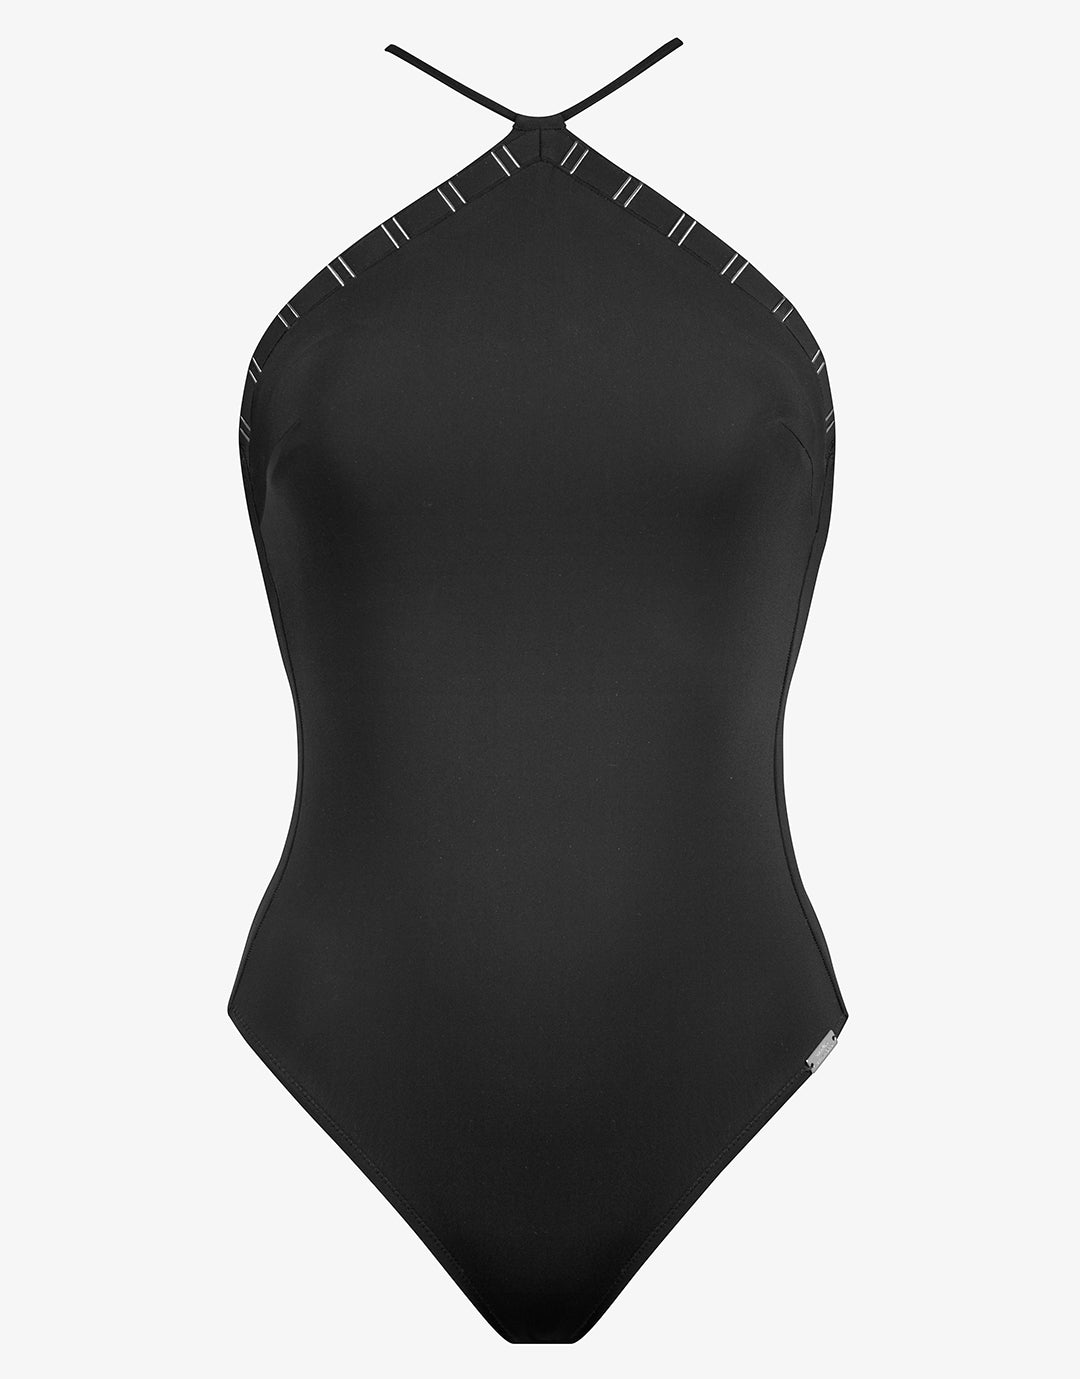 Code Swimsuit - Black - Simply Beach UK